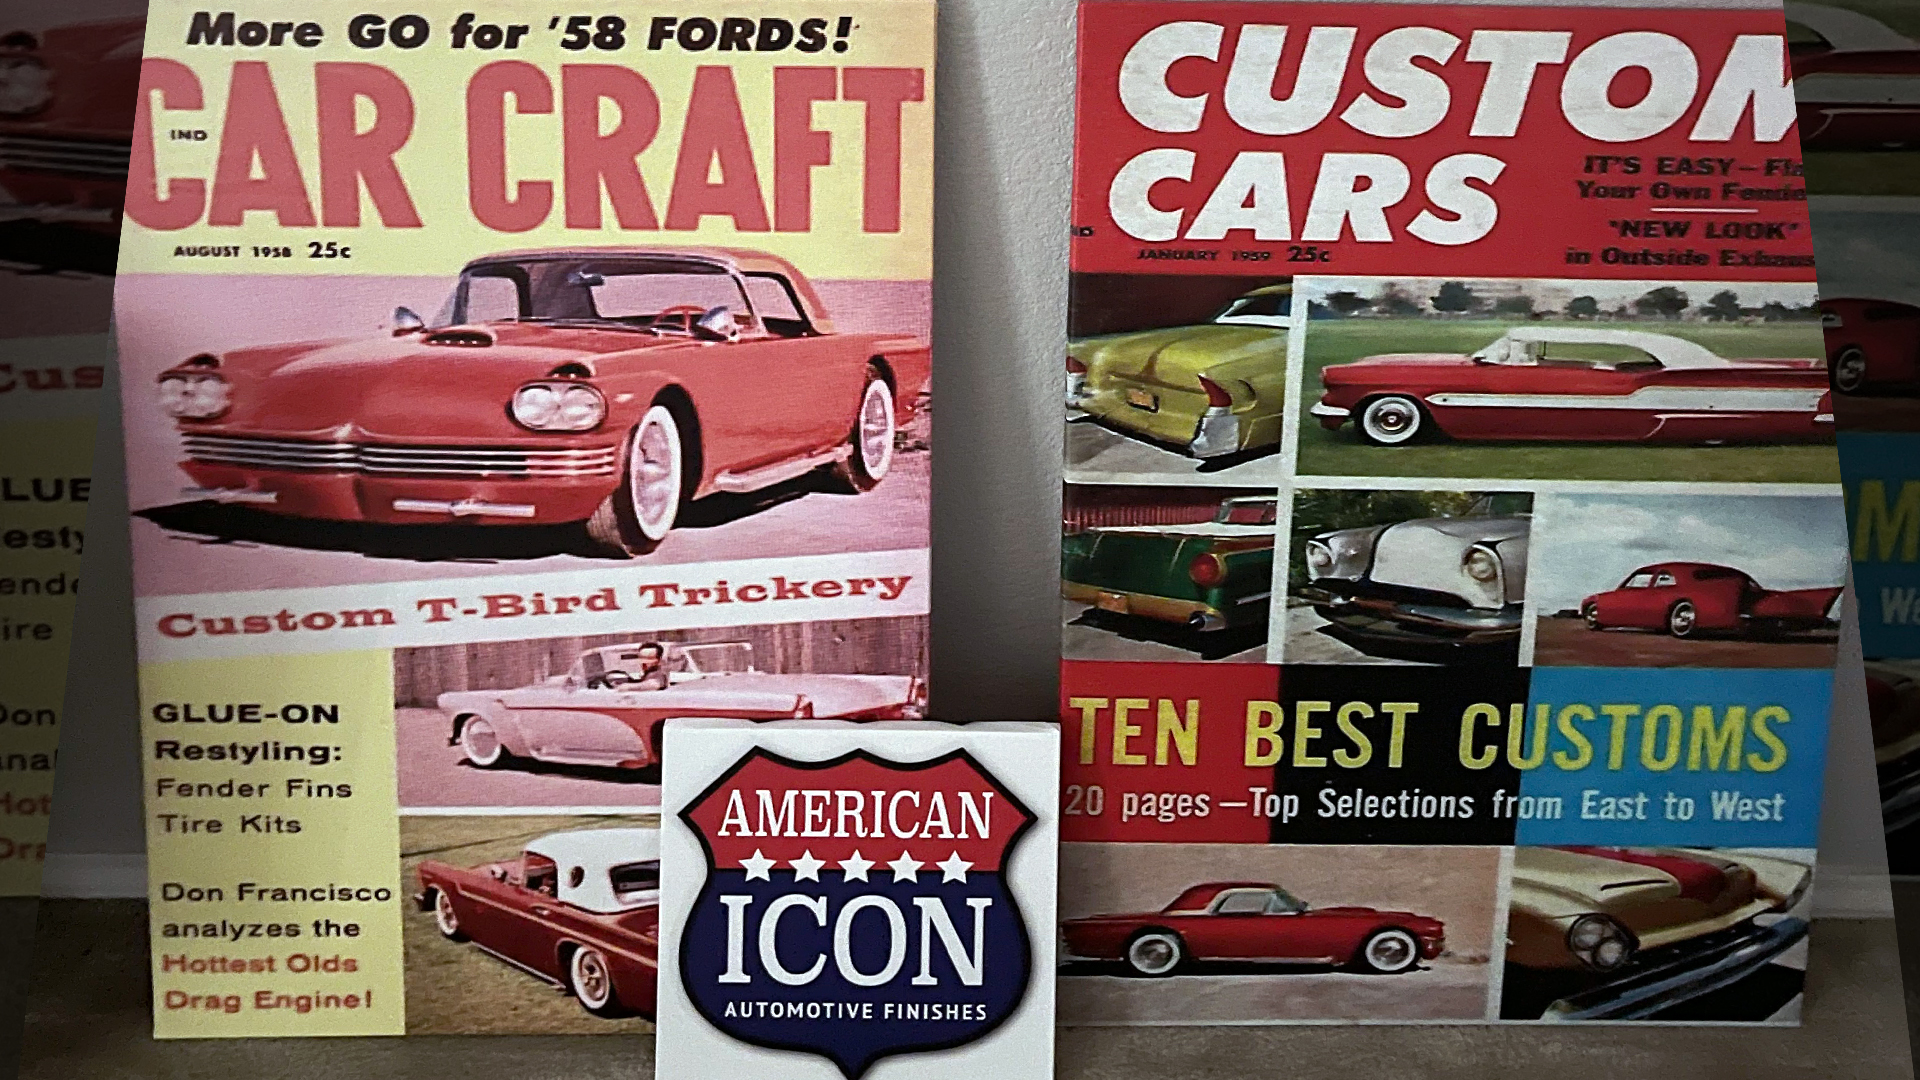 Car Craft and Custom Cars magazine covers